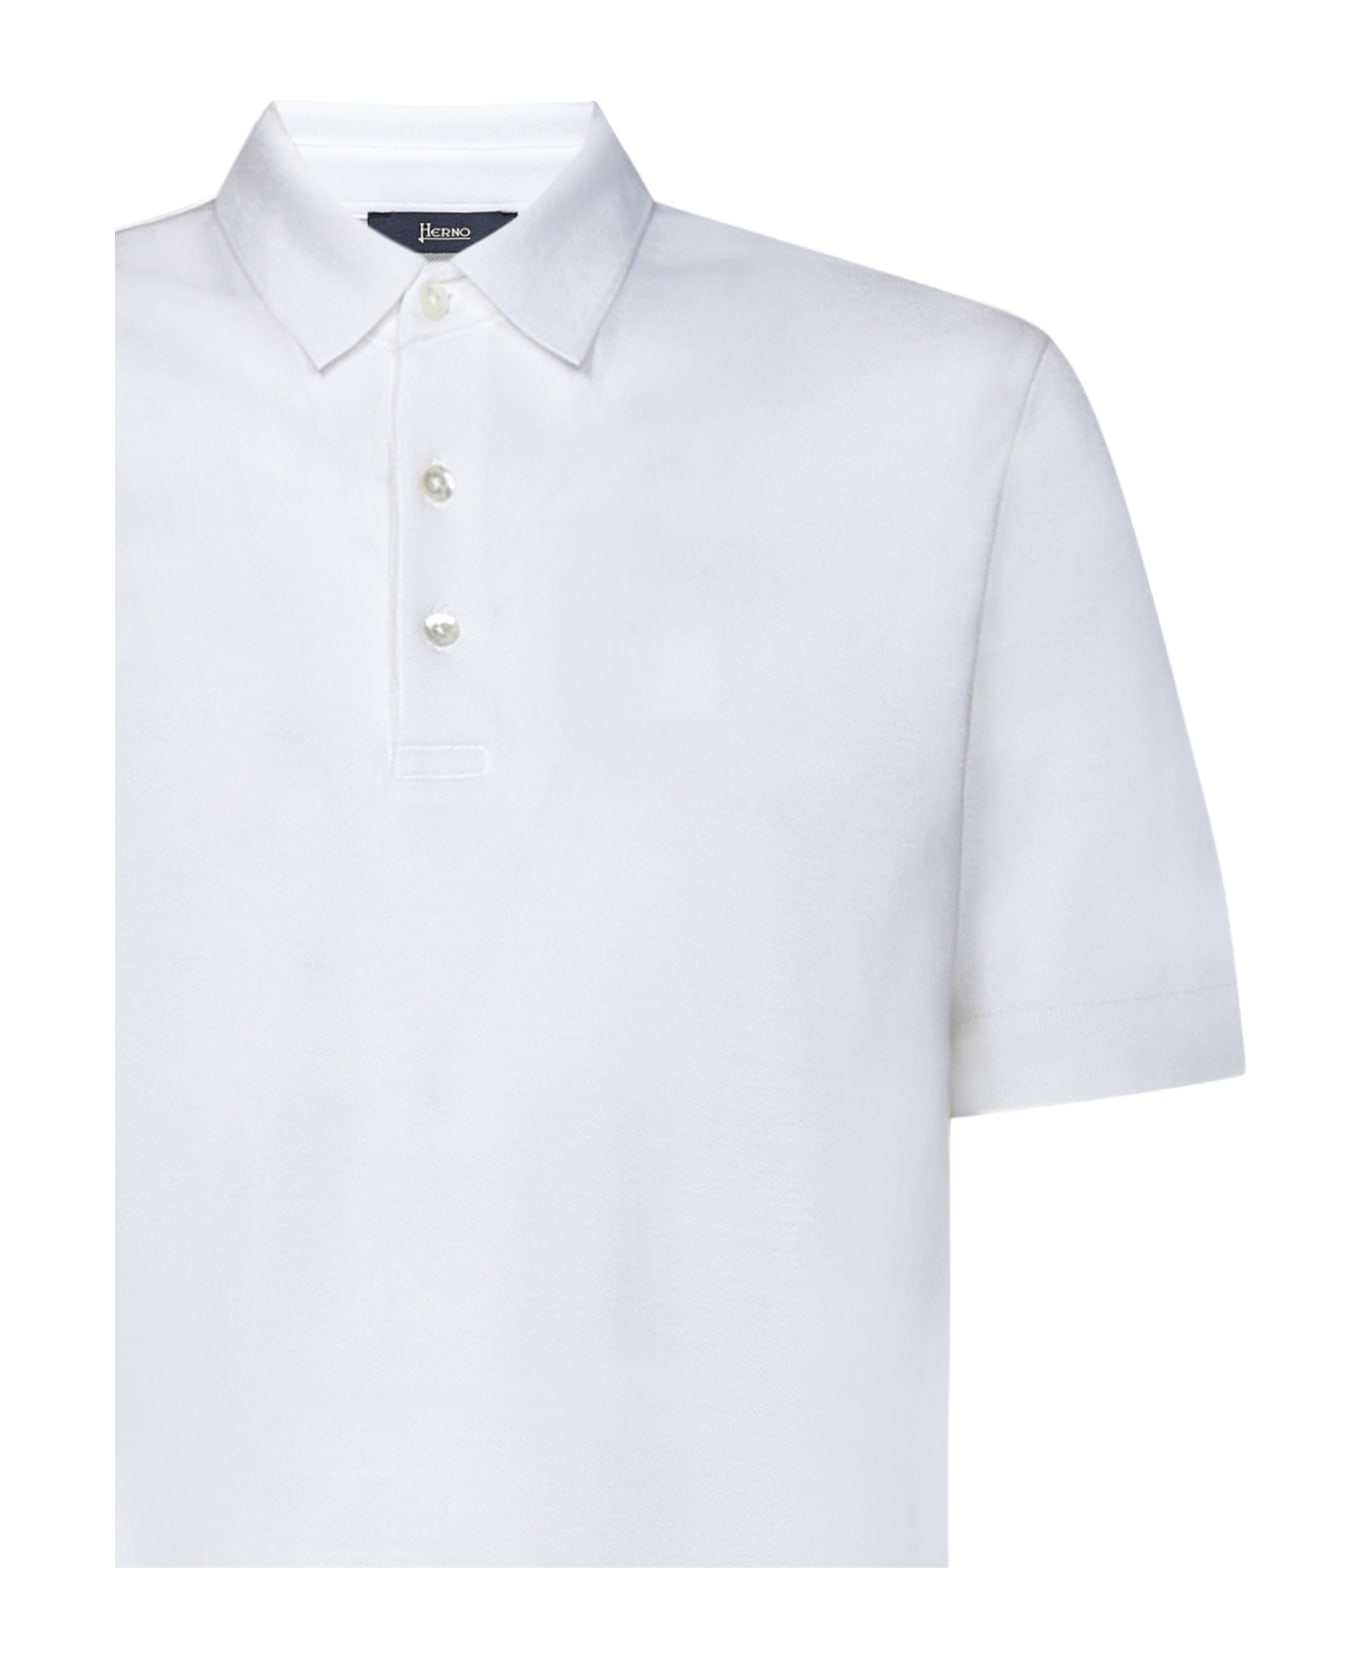 Herno Polo Shirt - White ポロシャツ